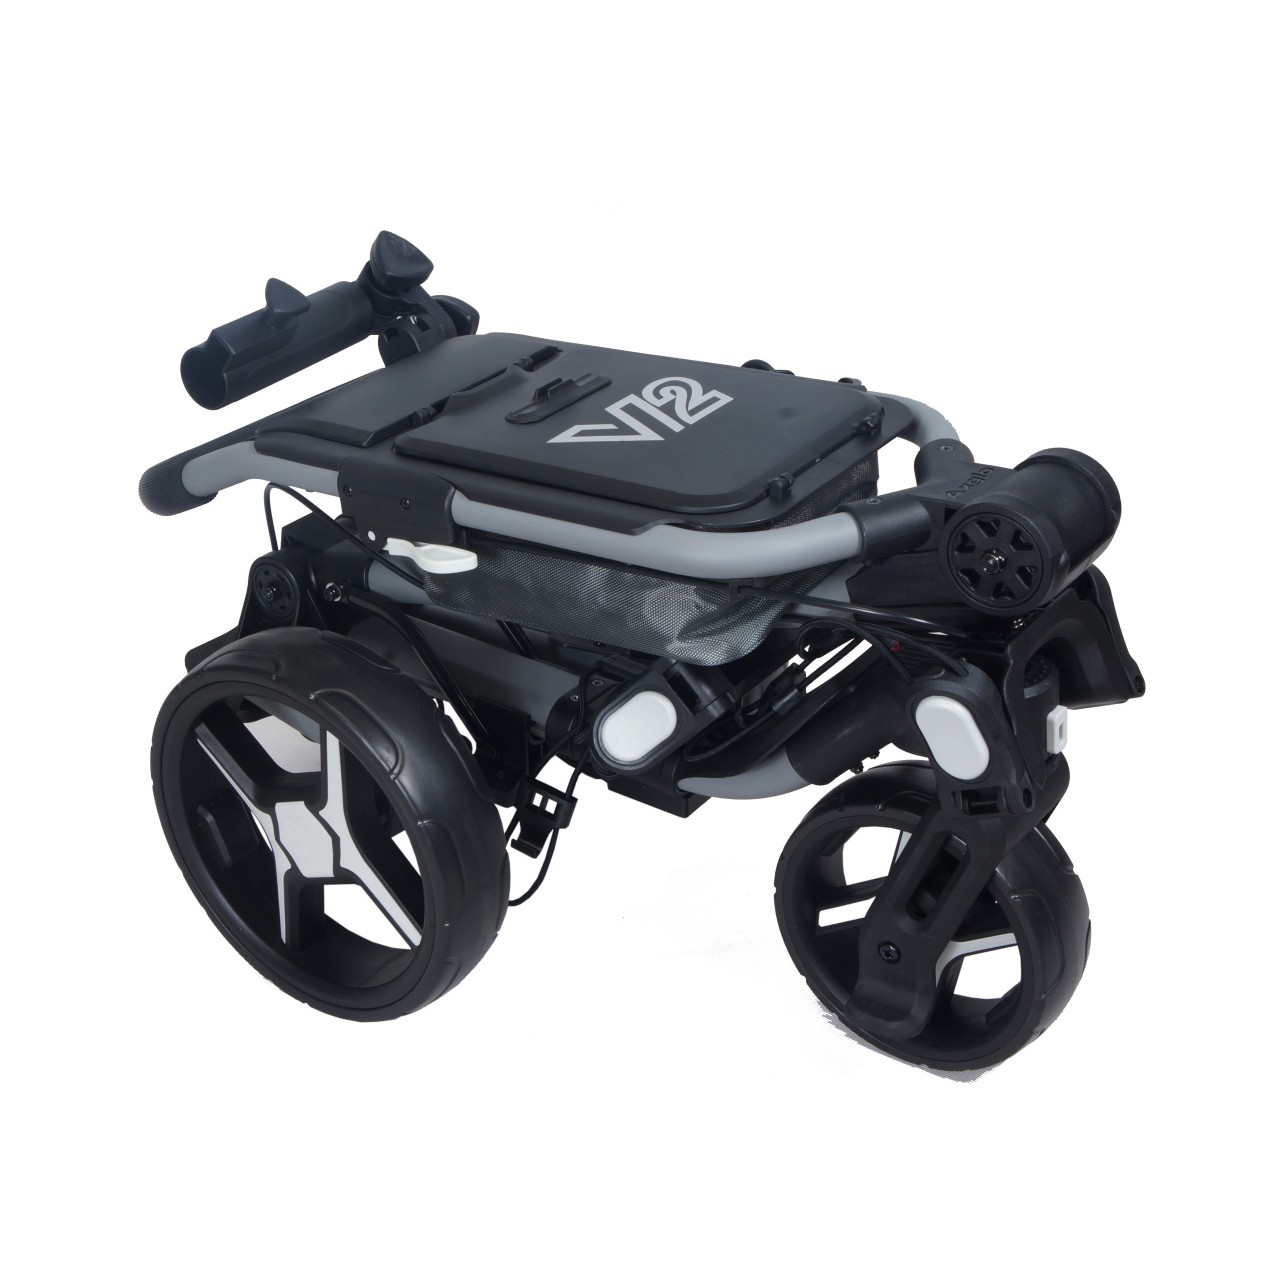 AXGLO Tri-360 V2 ruèní tøíkolový golfový vozík GREY/GREY + ZDARMA obal na kola - zvìtšit obrázek